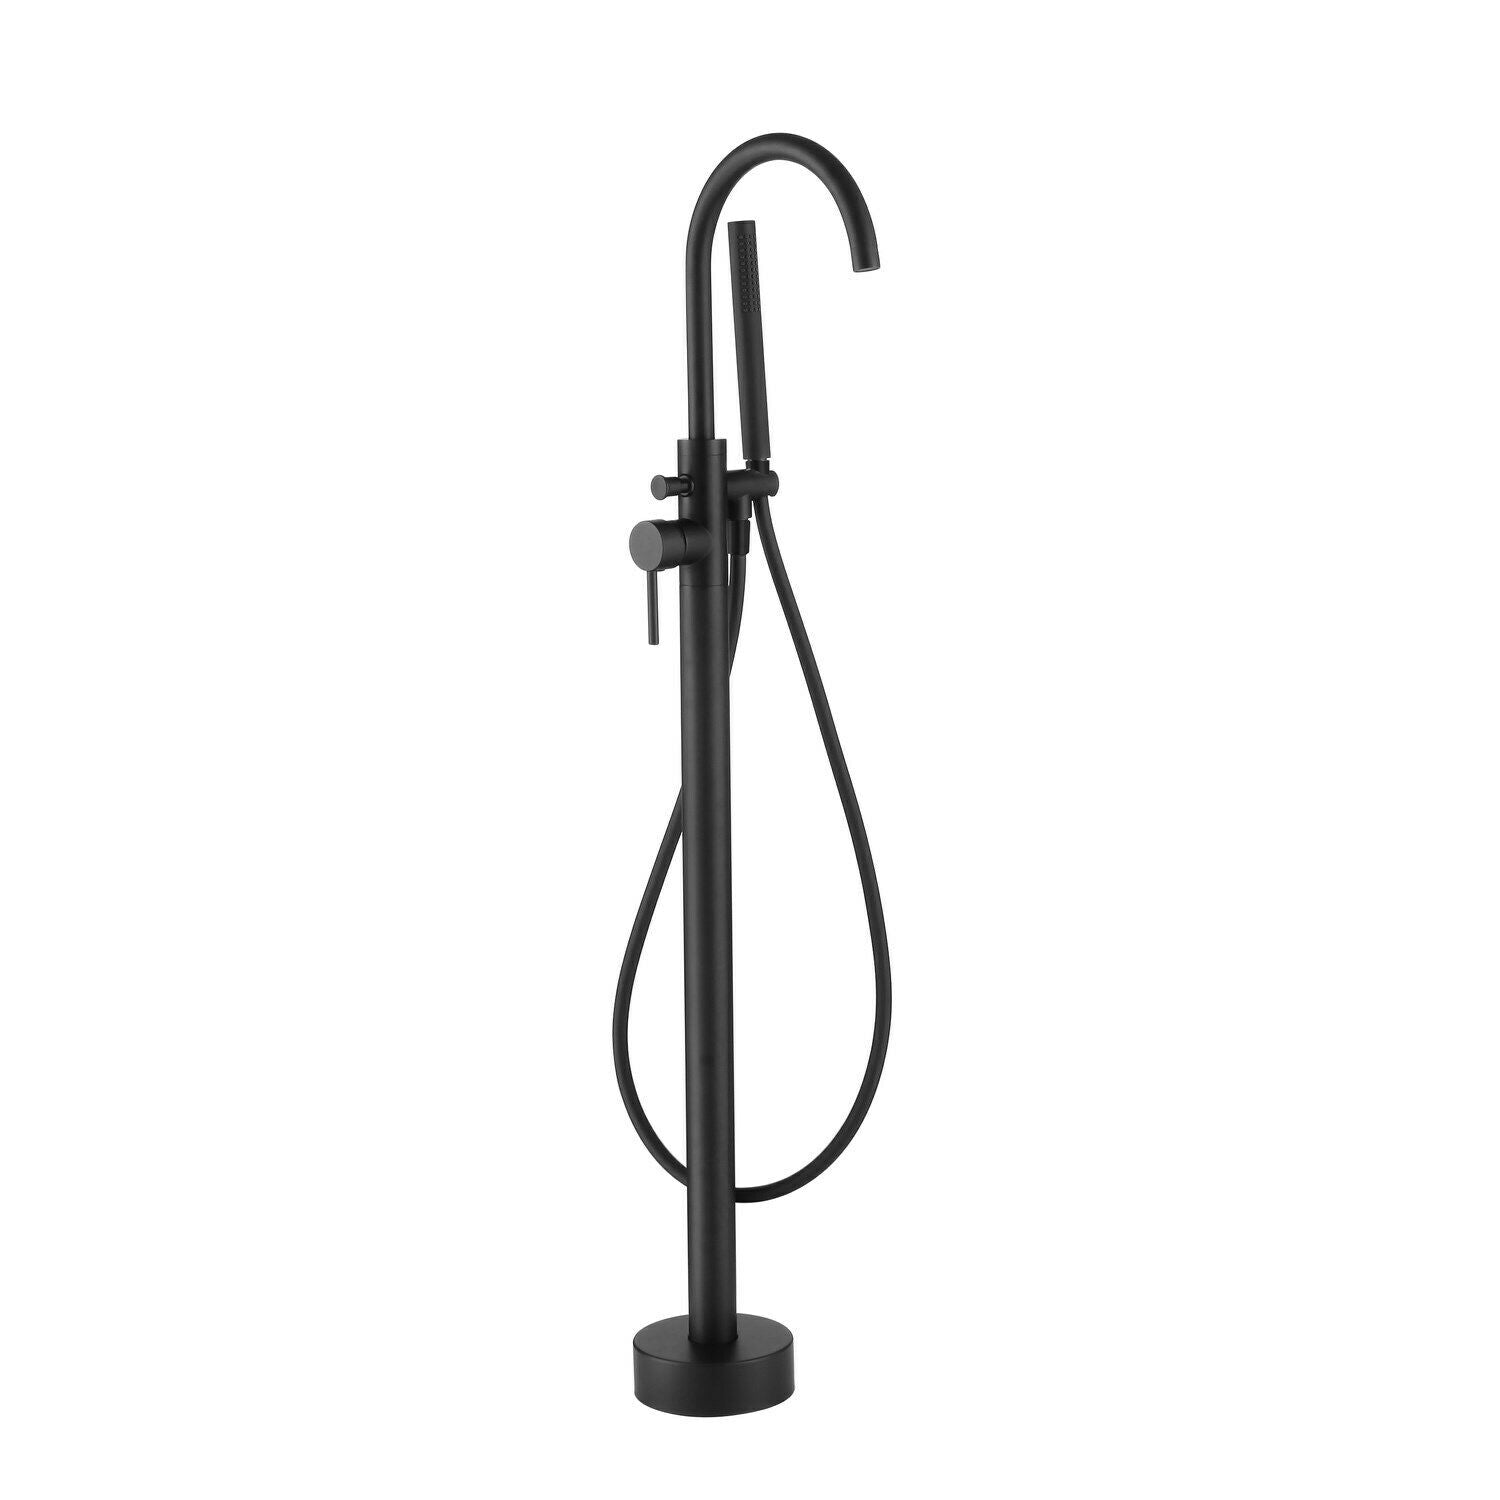 Floor Mounted Bath Shower Mixer Tap & Shower Kit Matte Black